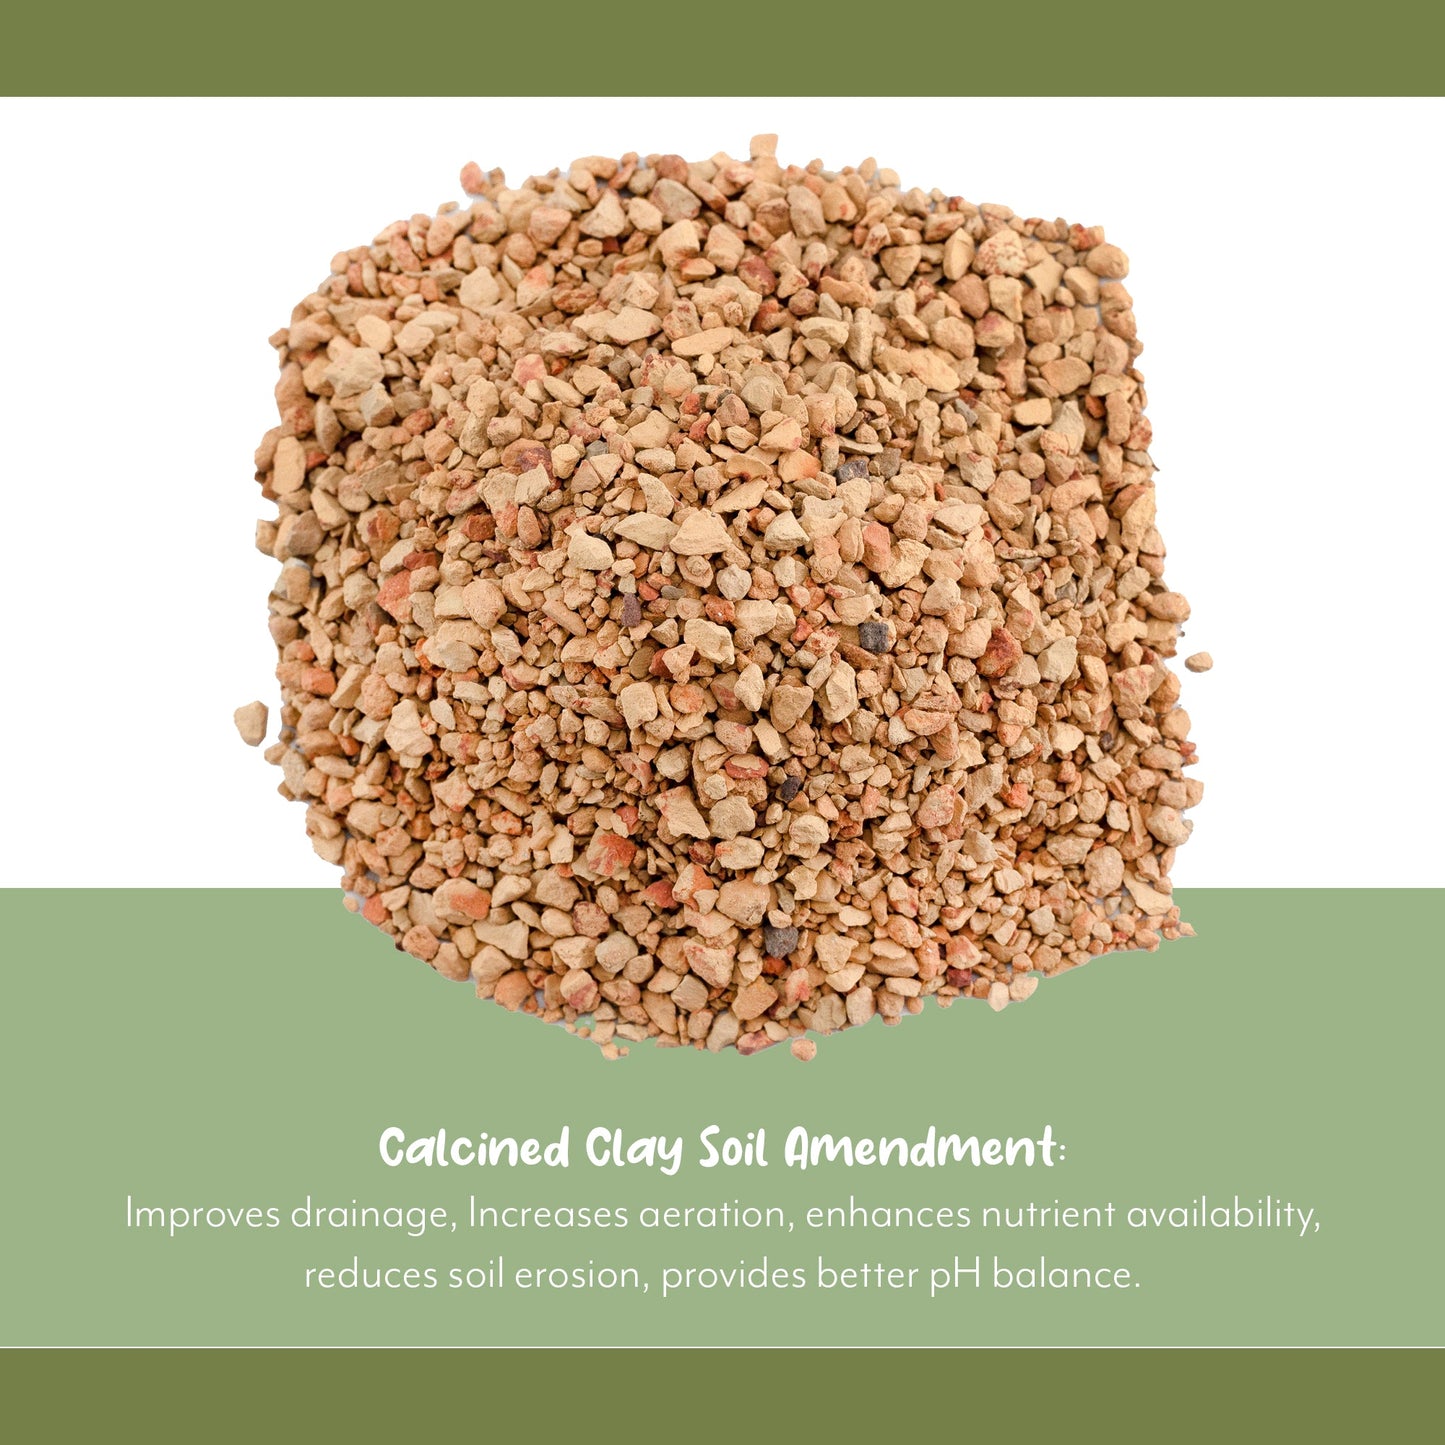 Calcined Clay Bonsai Soil Amendment (4 Quarts) - SSKIT226